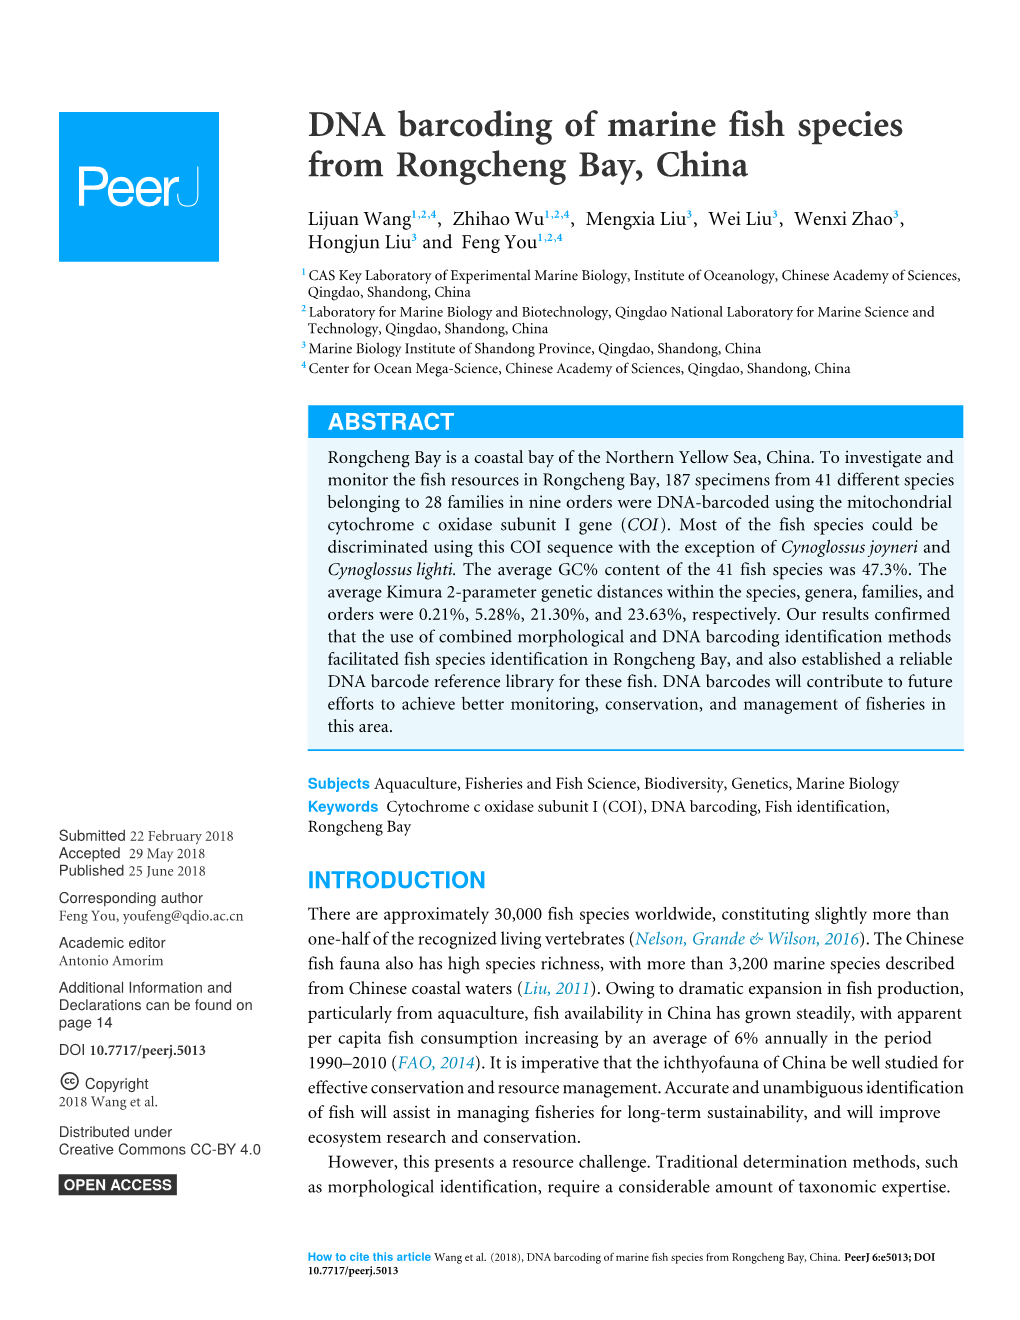 DNA Barcoding of Marine Fish Species from Rongcheng Bay, China